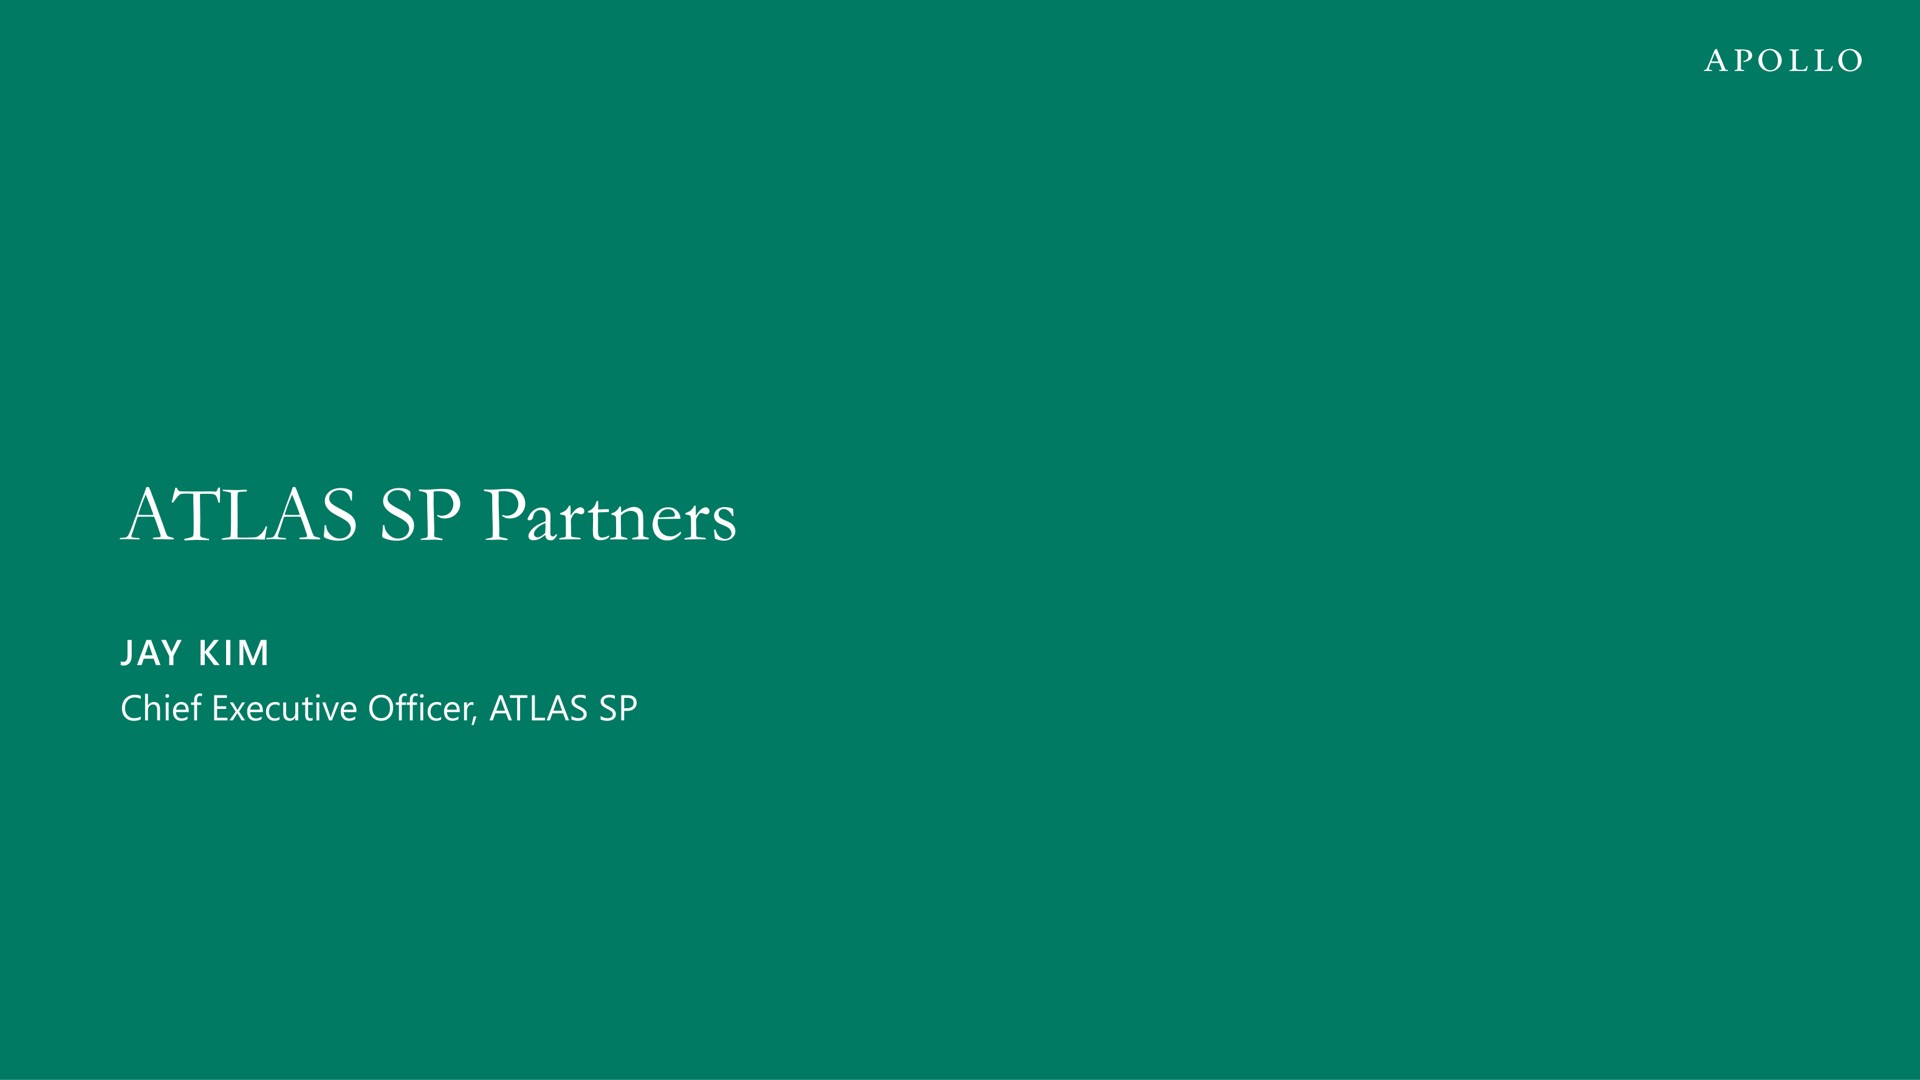 atlas partners | Apollo Global Management